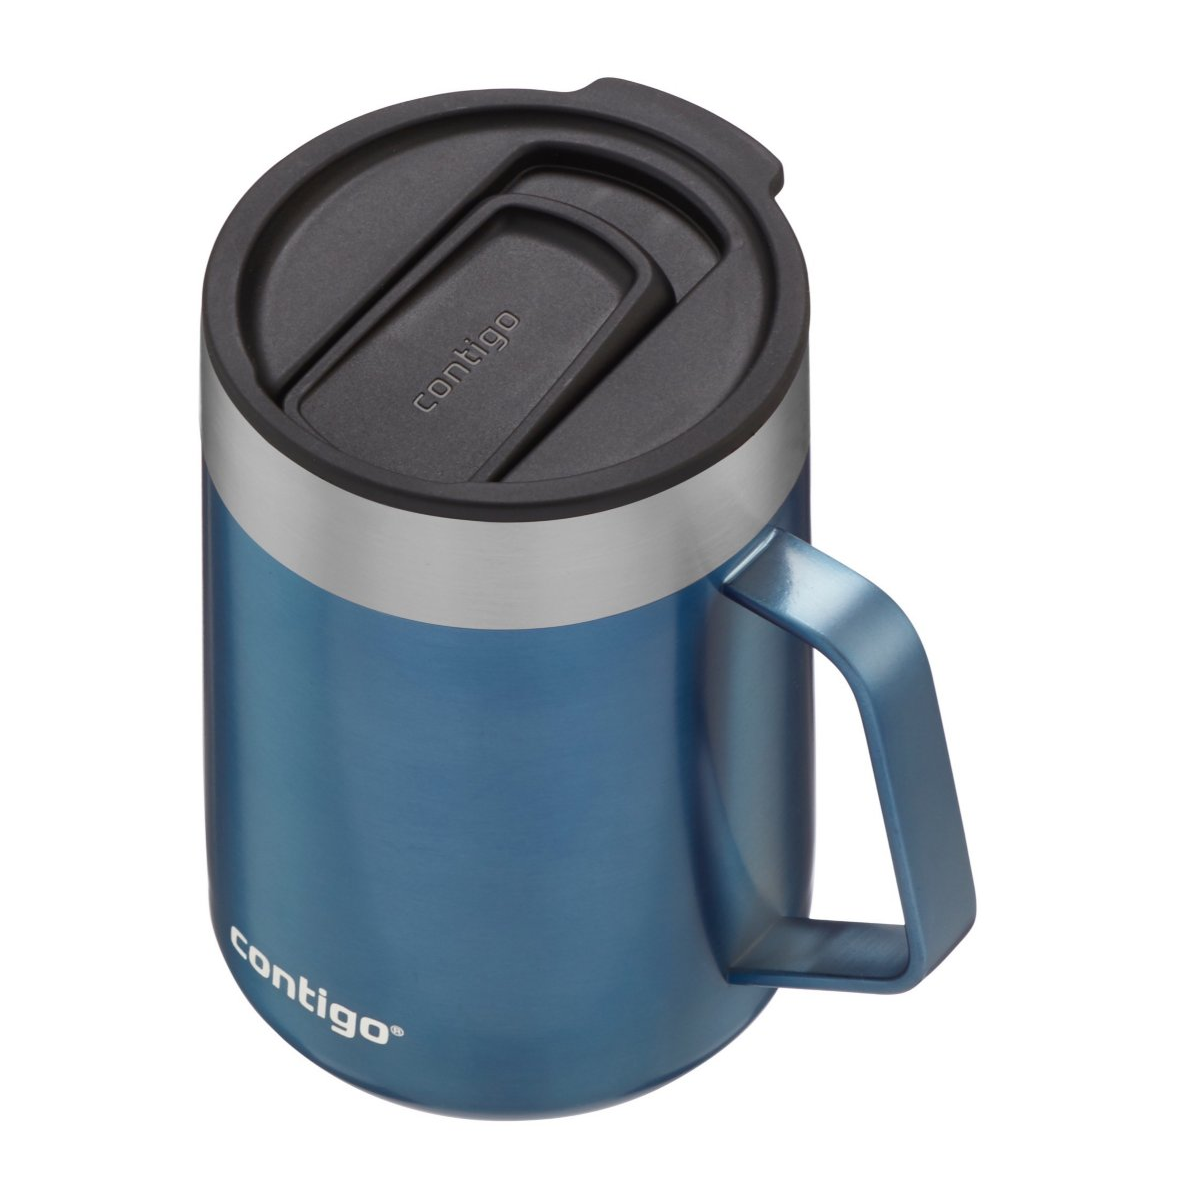 Contigo SnapSeal Insulated Stainless Steel Travel Mug with Grip, 24 oz.,  Licorice